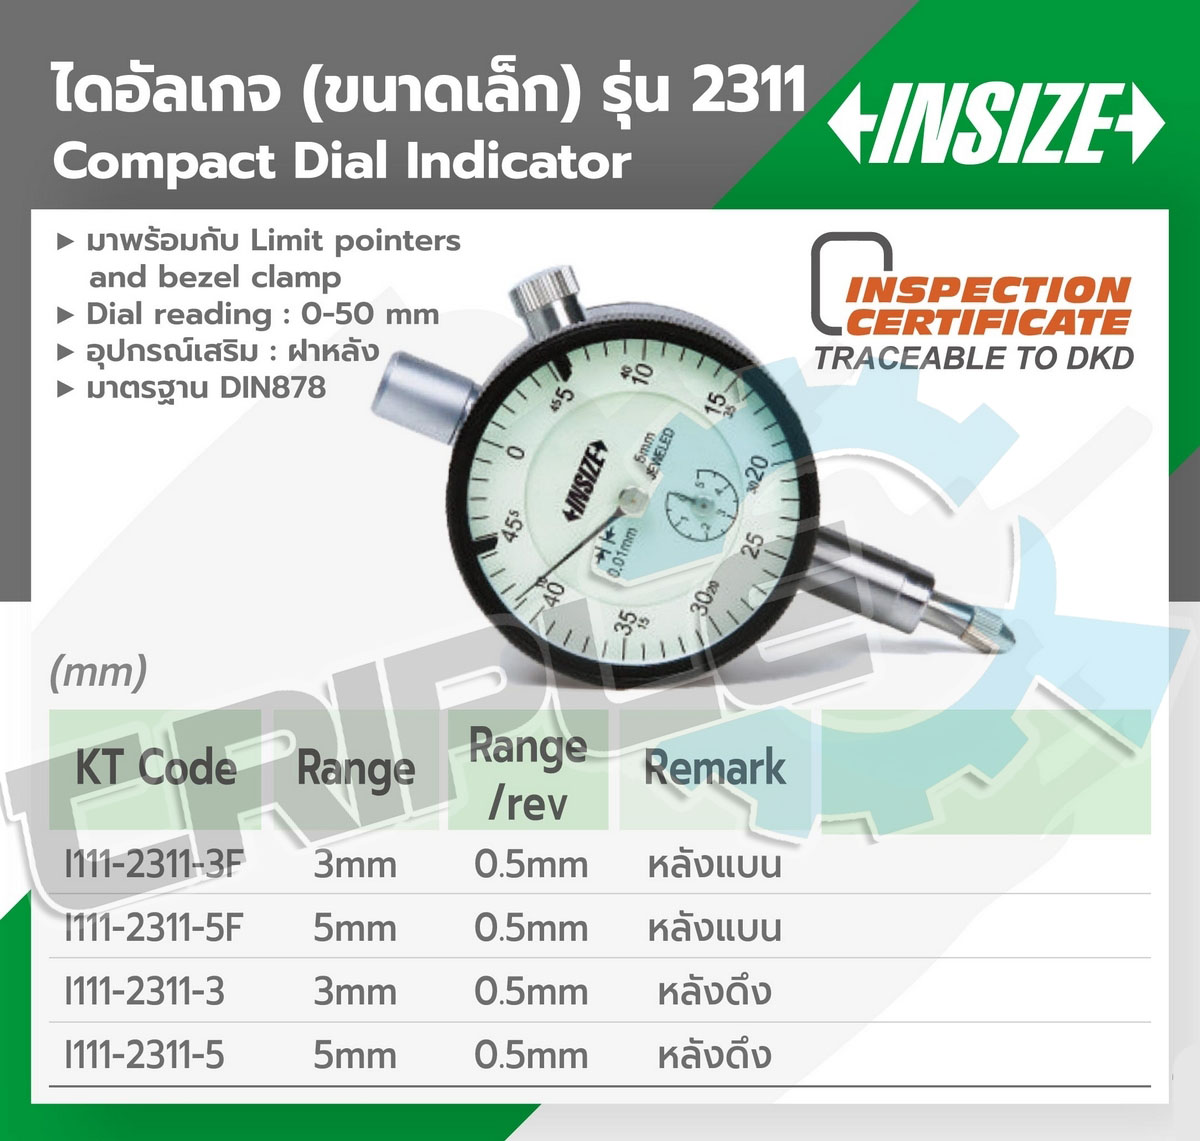 INSIZE - เครื่องไดอัลเกจ ขนาดเล็ก (ดึงหลัง) (Compact Dial Indicator) รุ่น 2311-5 ช่วงระยะวัด 5 มม. Accuracy 16 μm Hysteresis 3 µm Range/rev 0.5 มม. Dial Reading 0-50 มม.